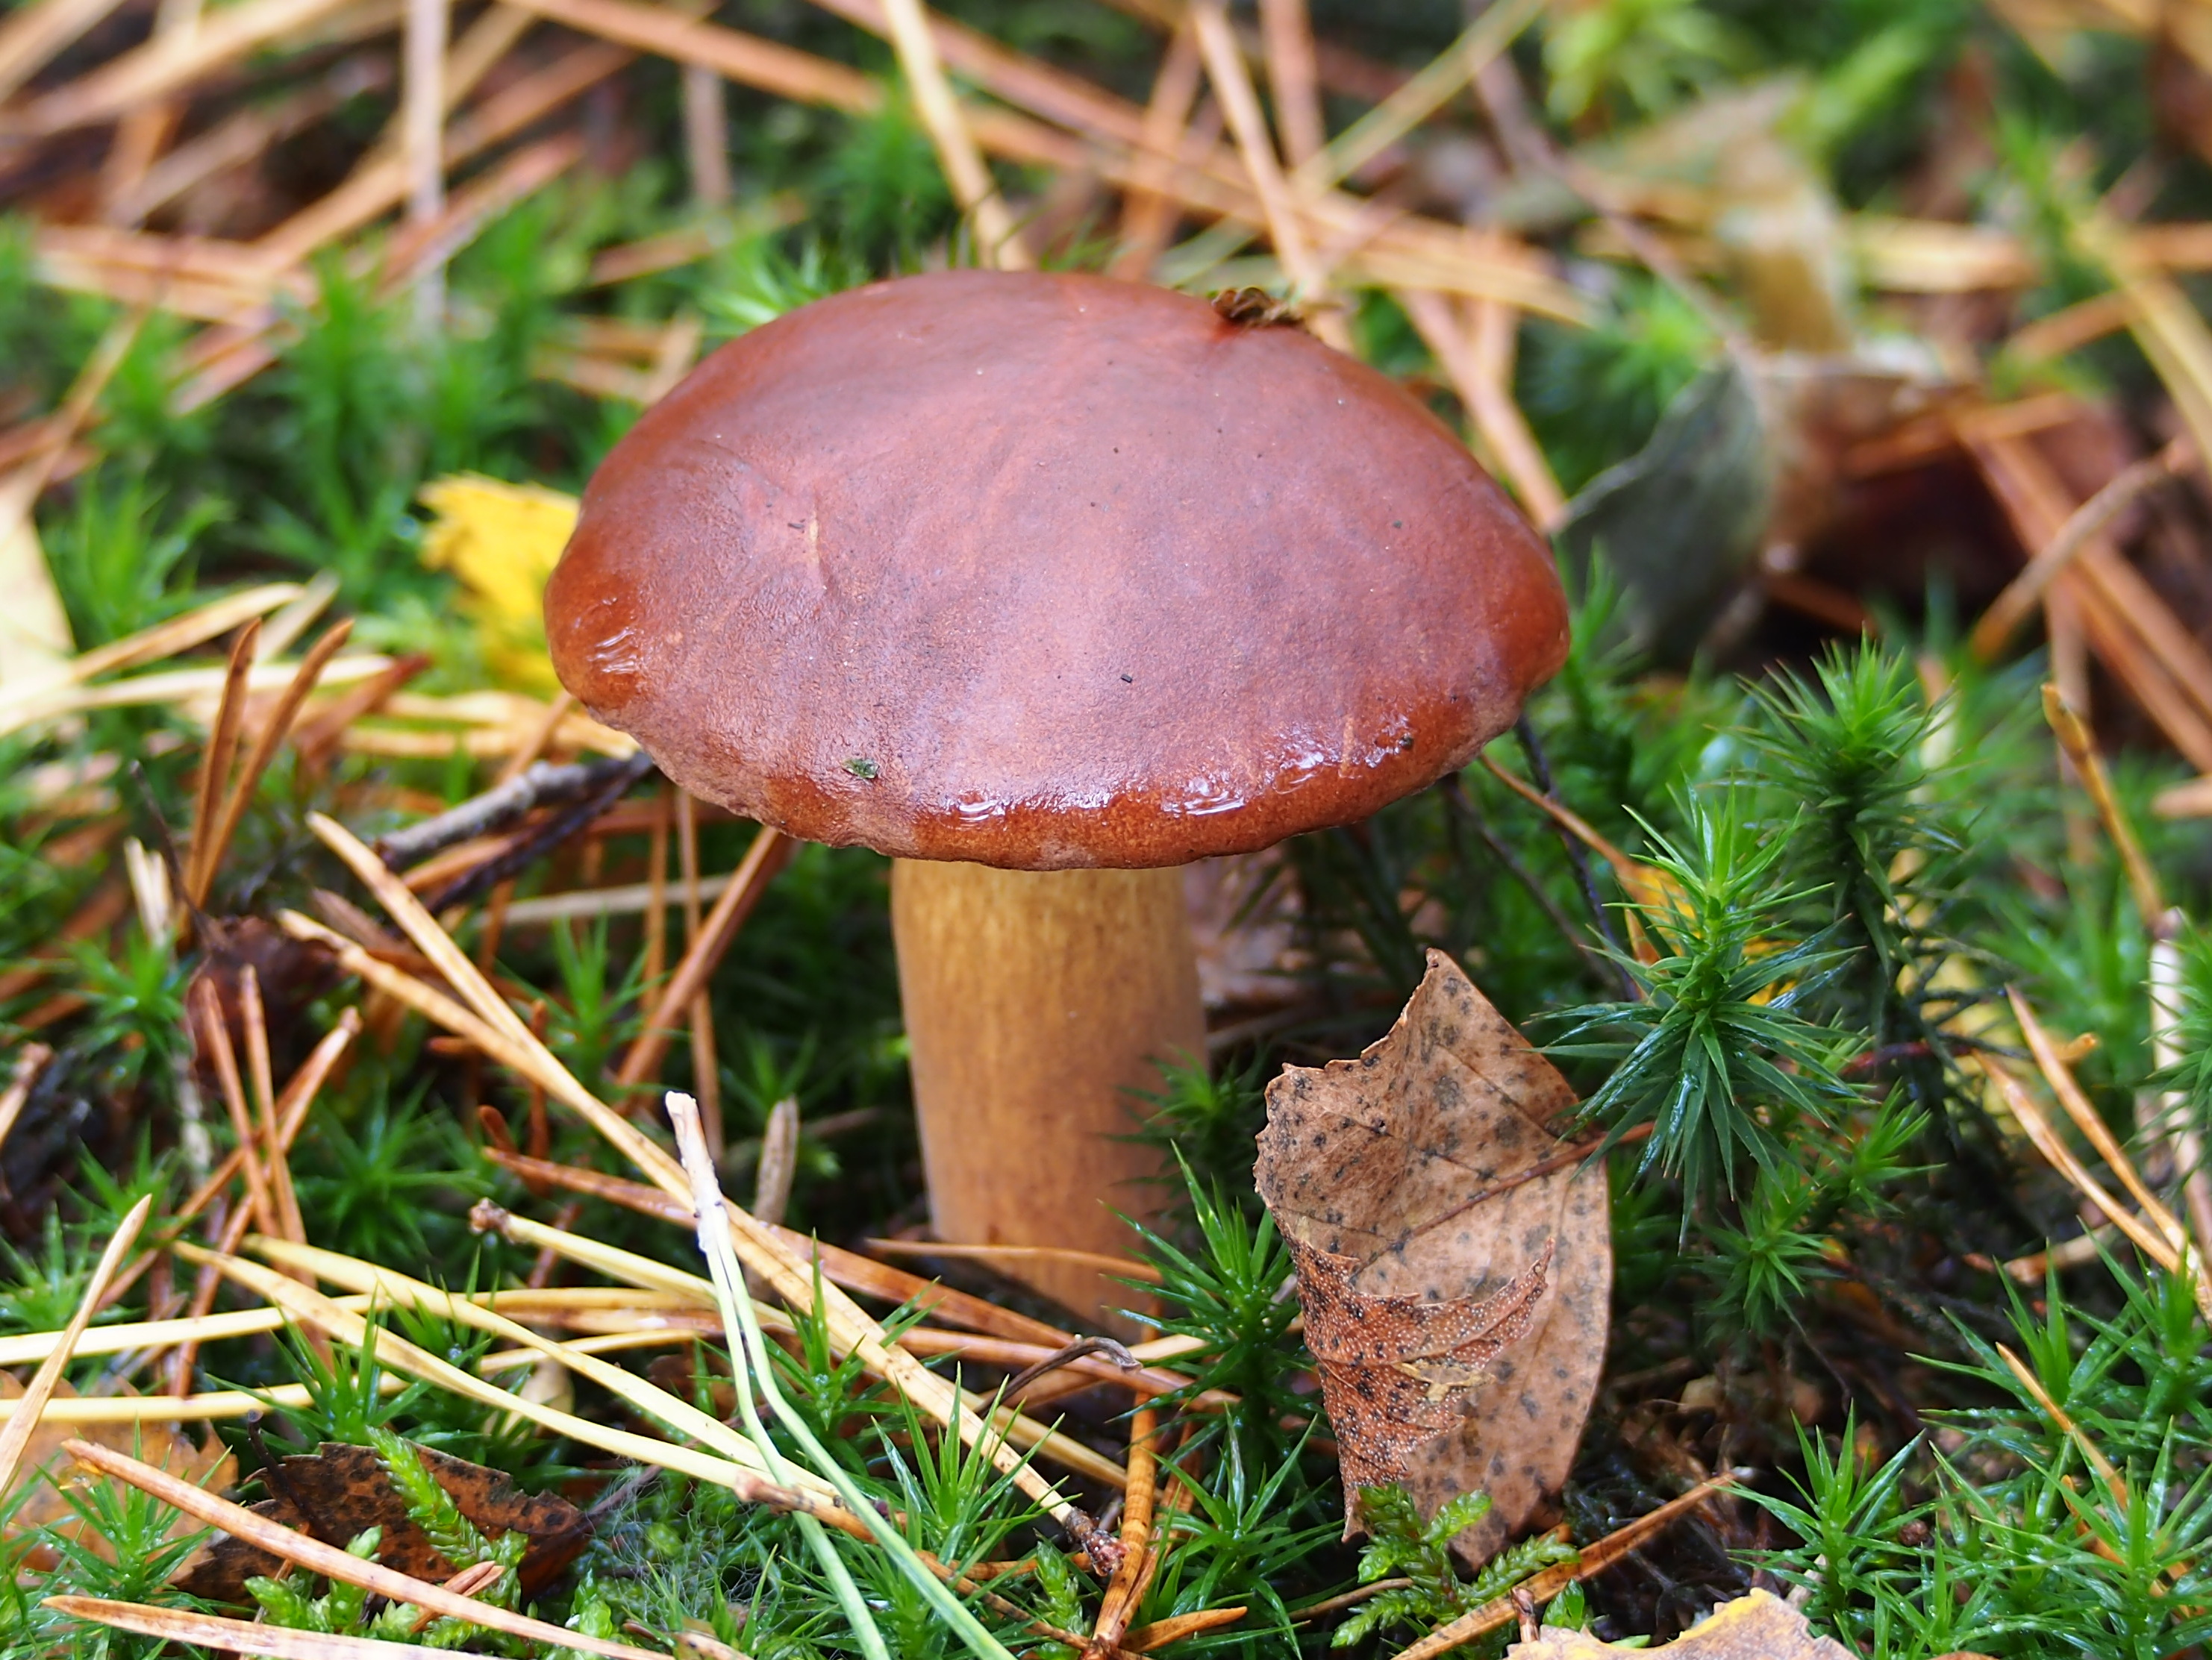 Unidentified mushrooms pic-026